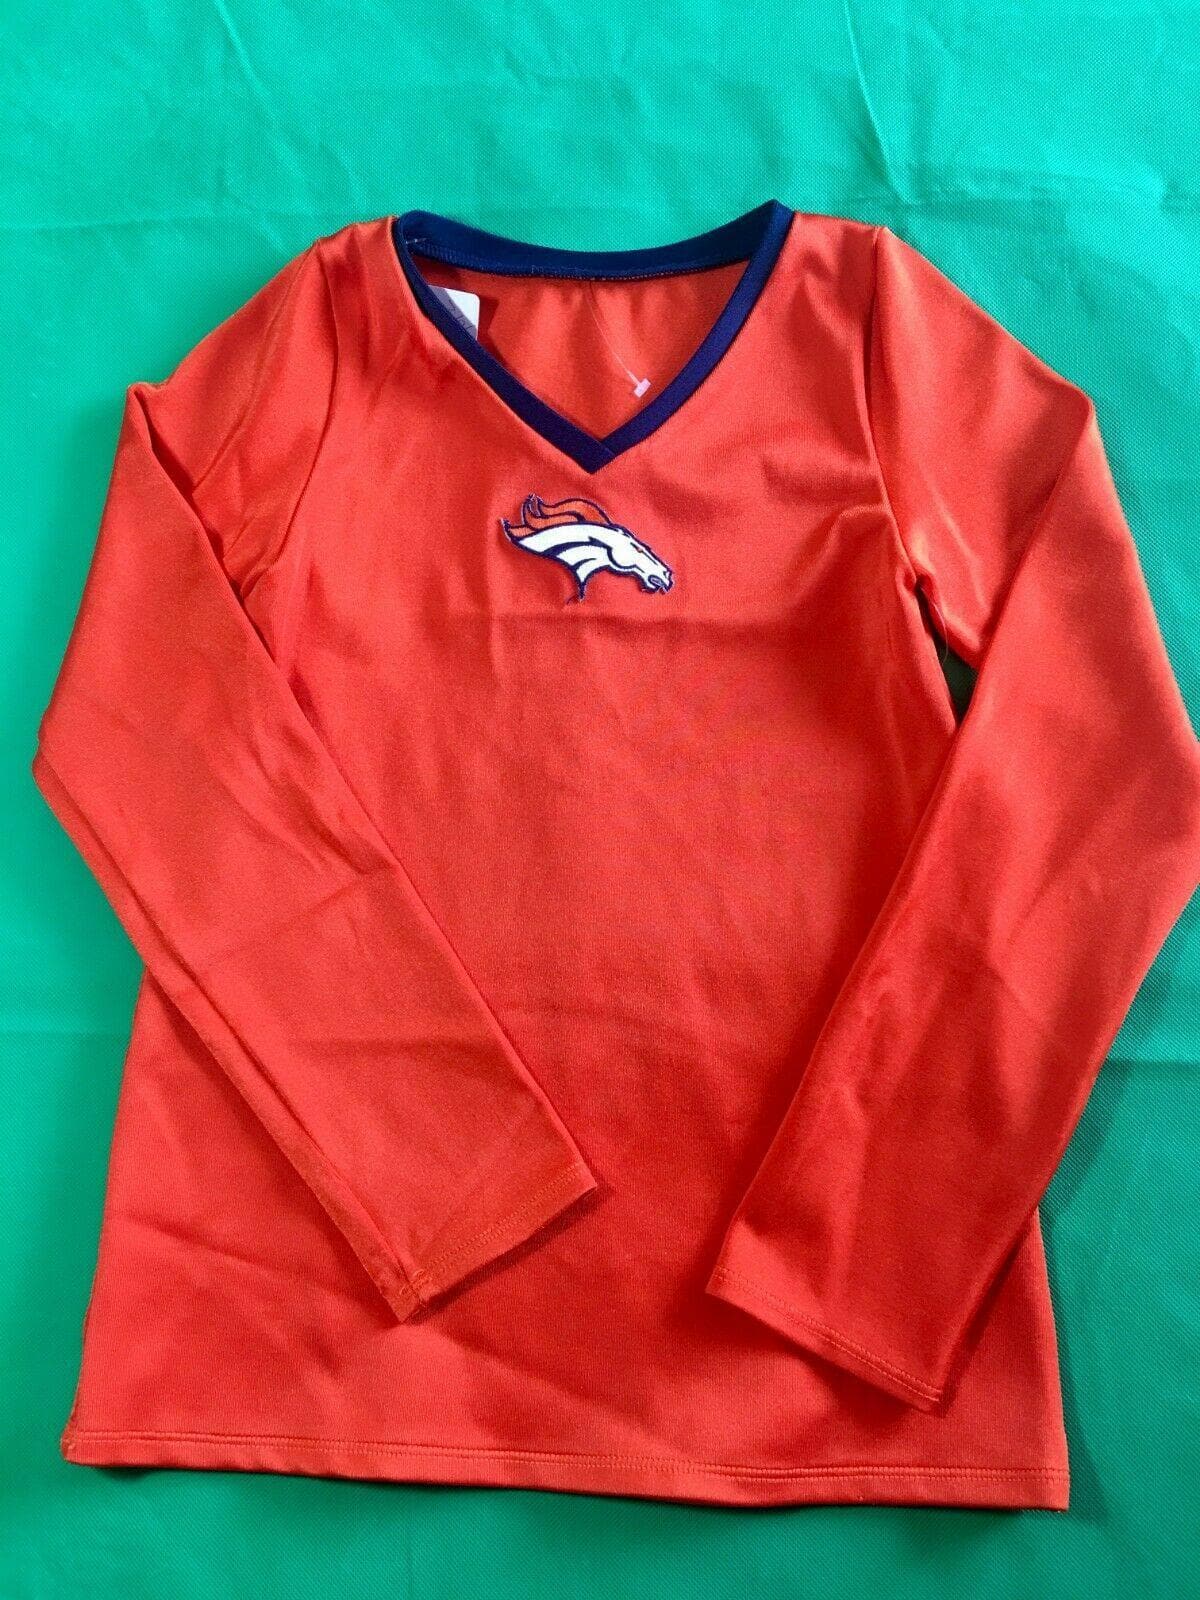 NFL Denver Broncos Original Junior Cheerleader Outfit Youth Medium 12